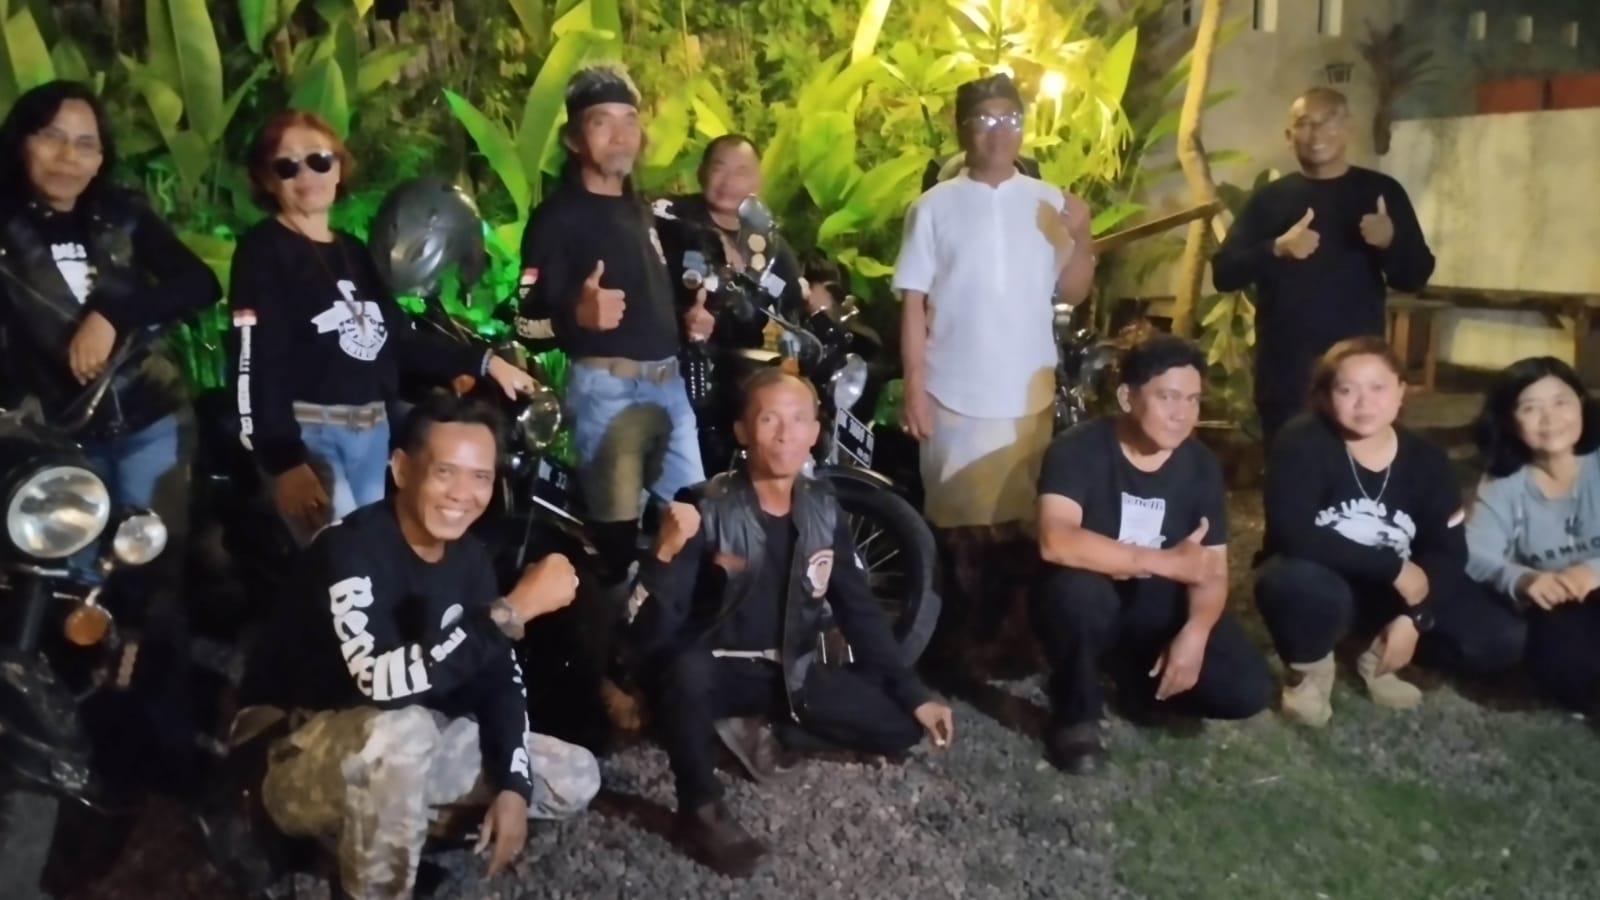 Benelli Jadi Idaman Pecinta Moge, Touring Awal Tahun 2023 ke Pulau Lombok